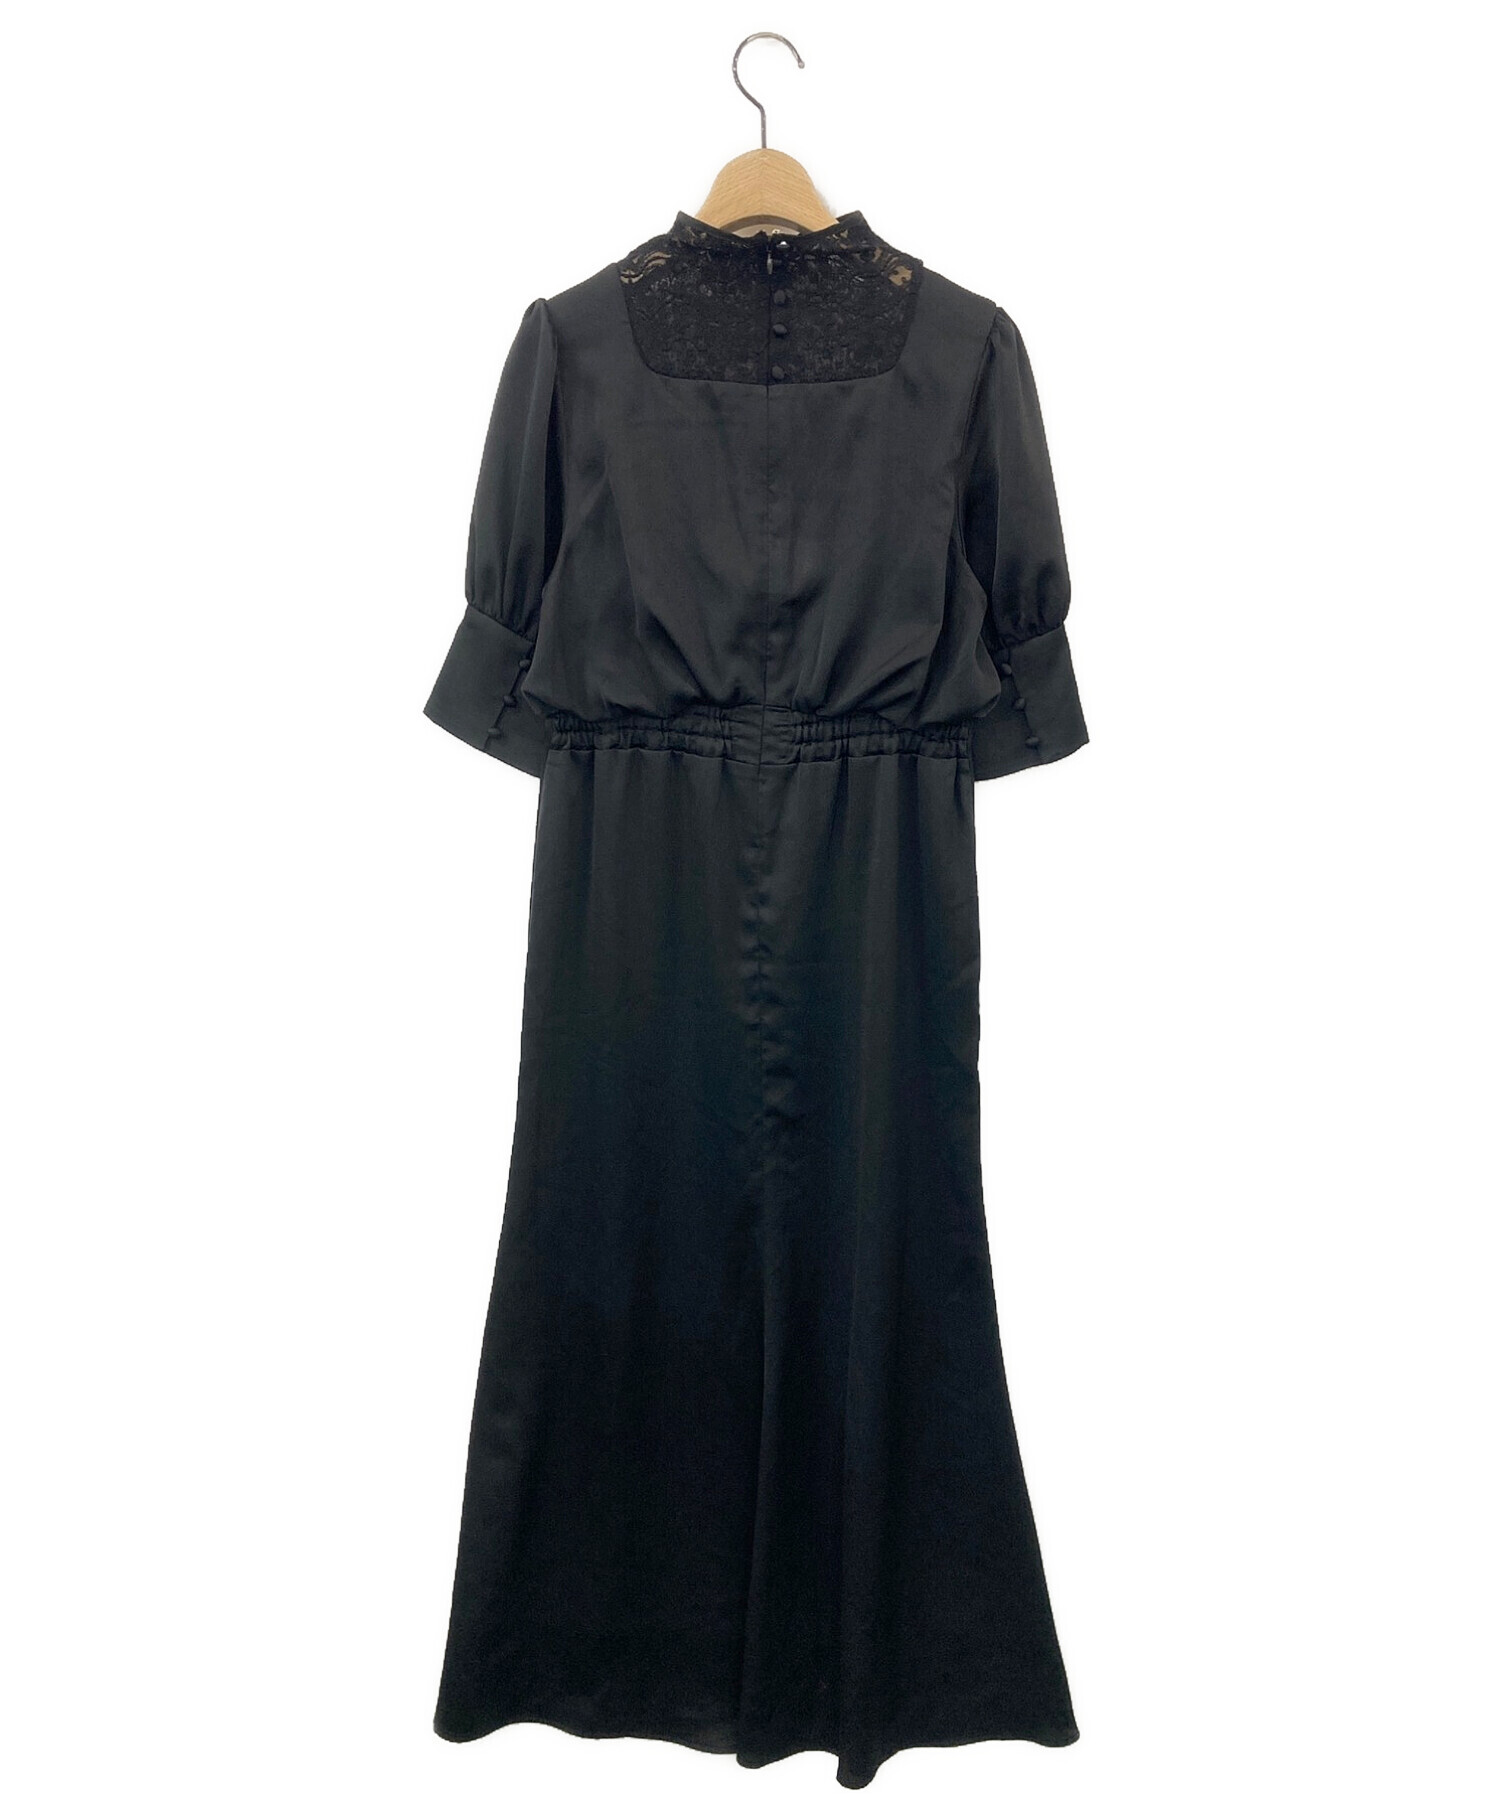 AMERI (アメリ) DECOLLETE LACE EMPIRE DRESS ブラック サイズ:S